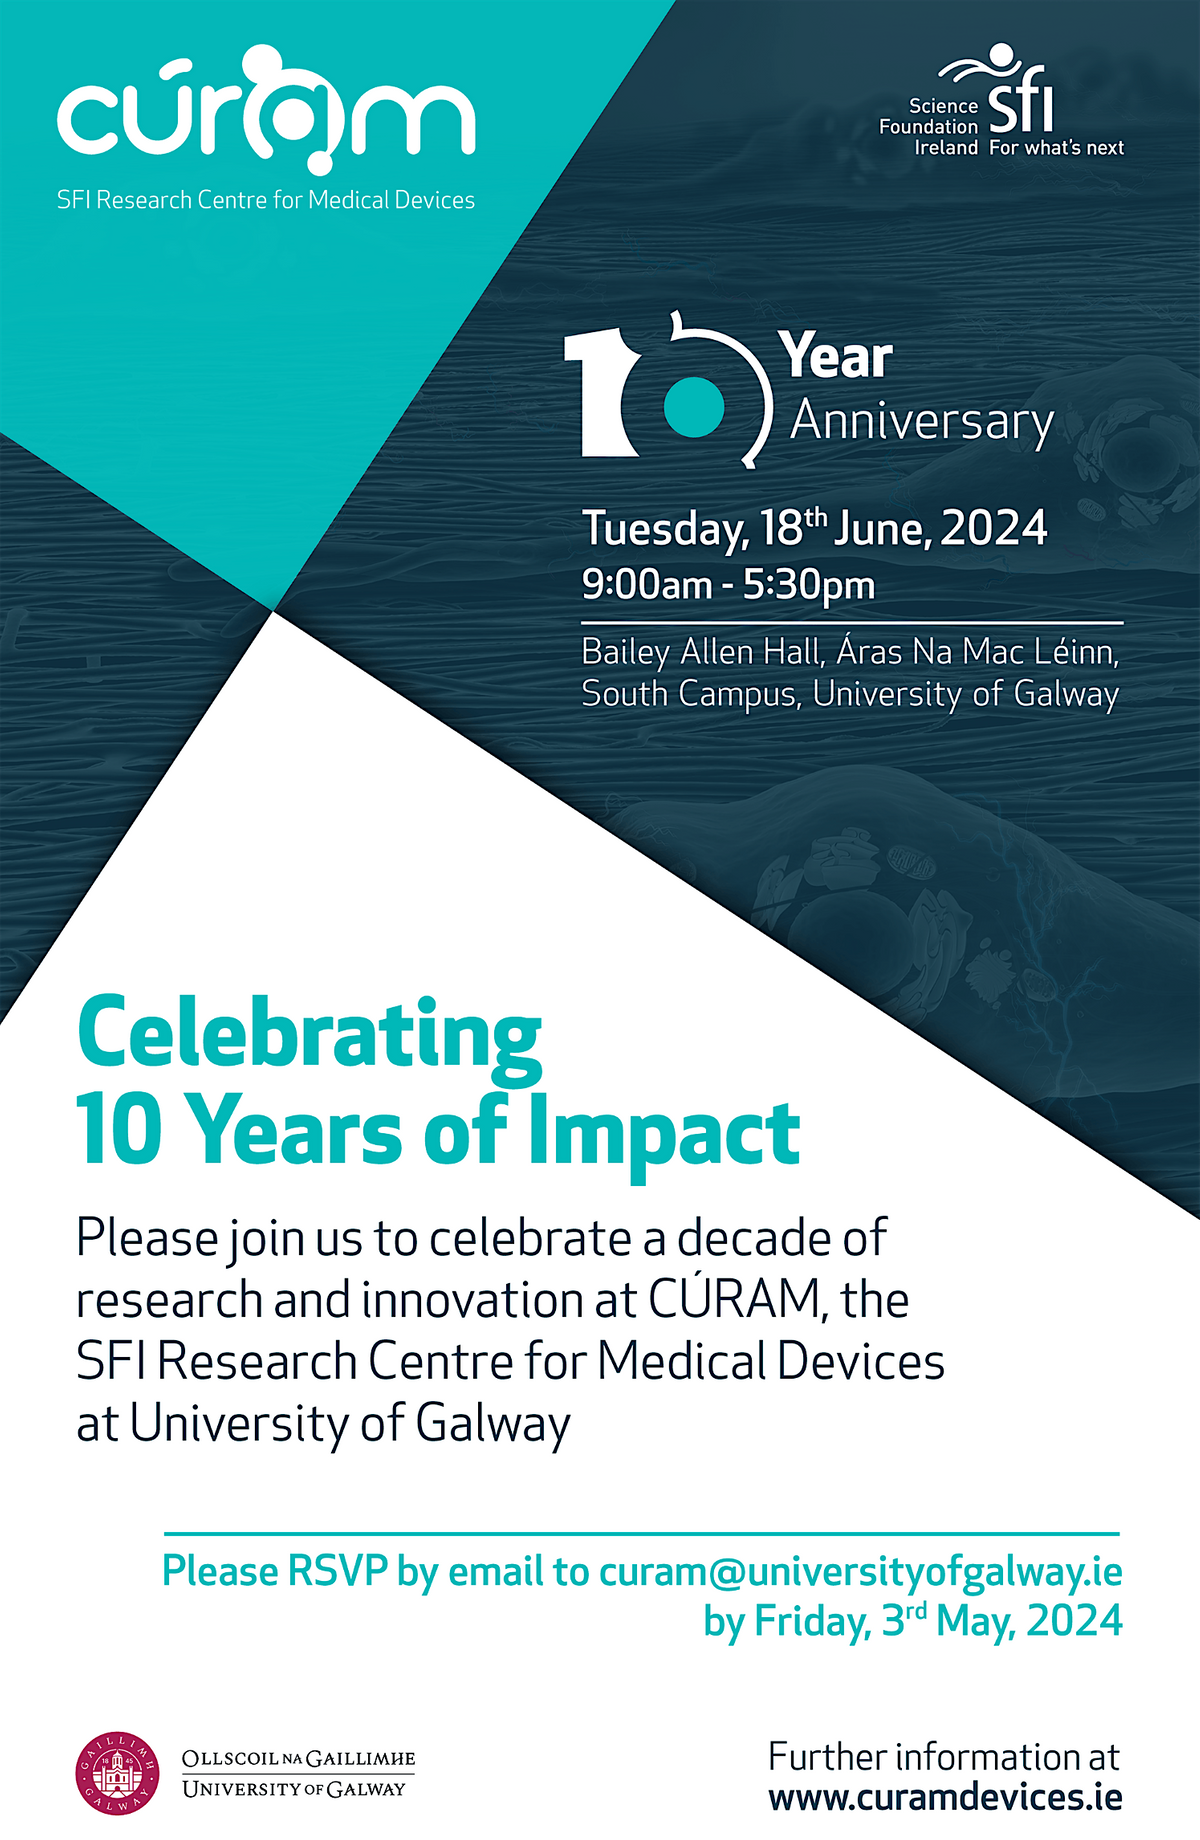 Celebrating 10 Years of Impact at C\u00daRAM